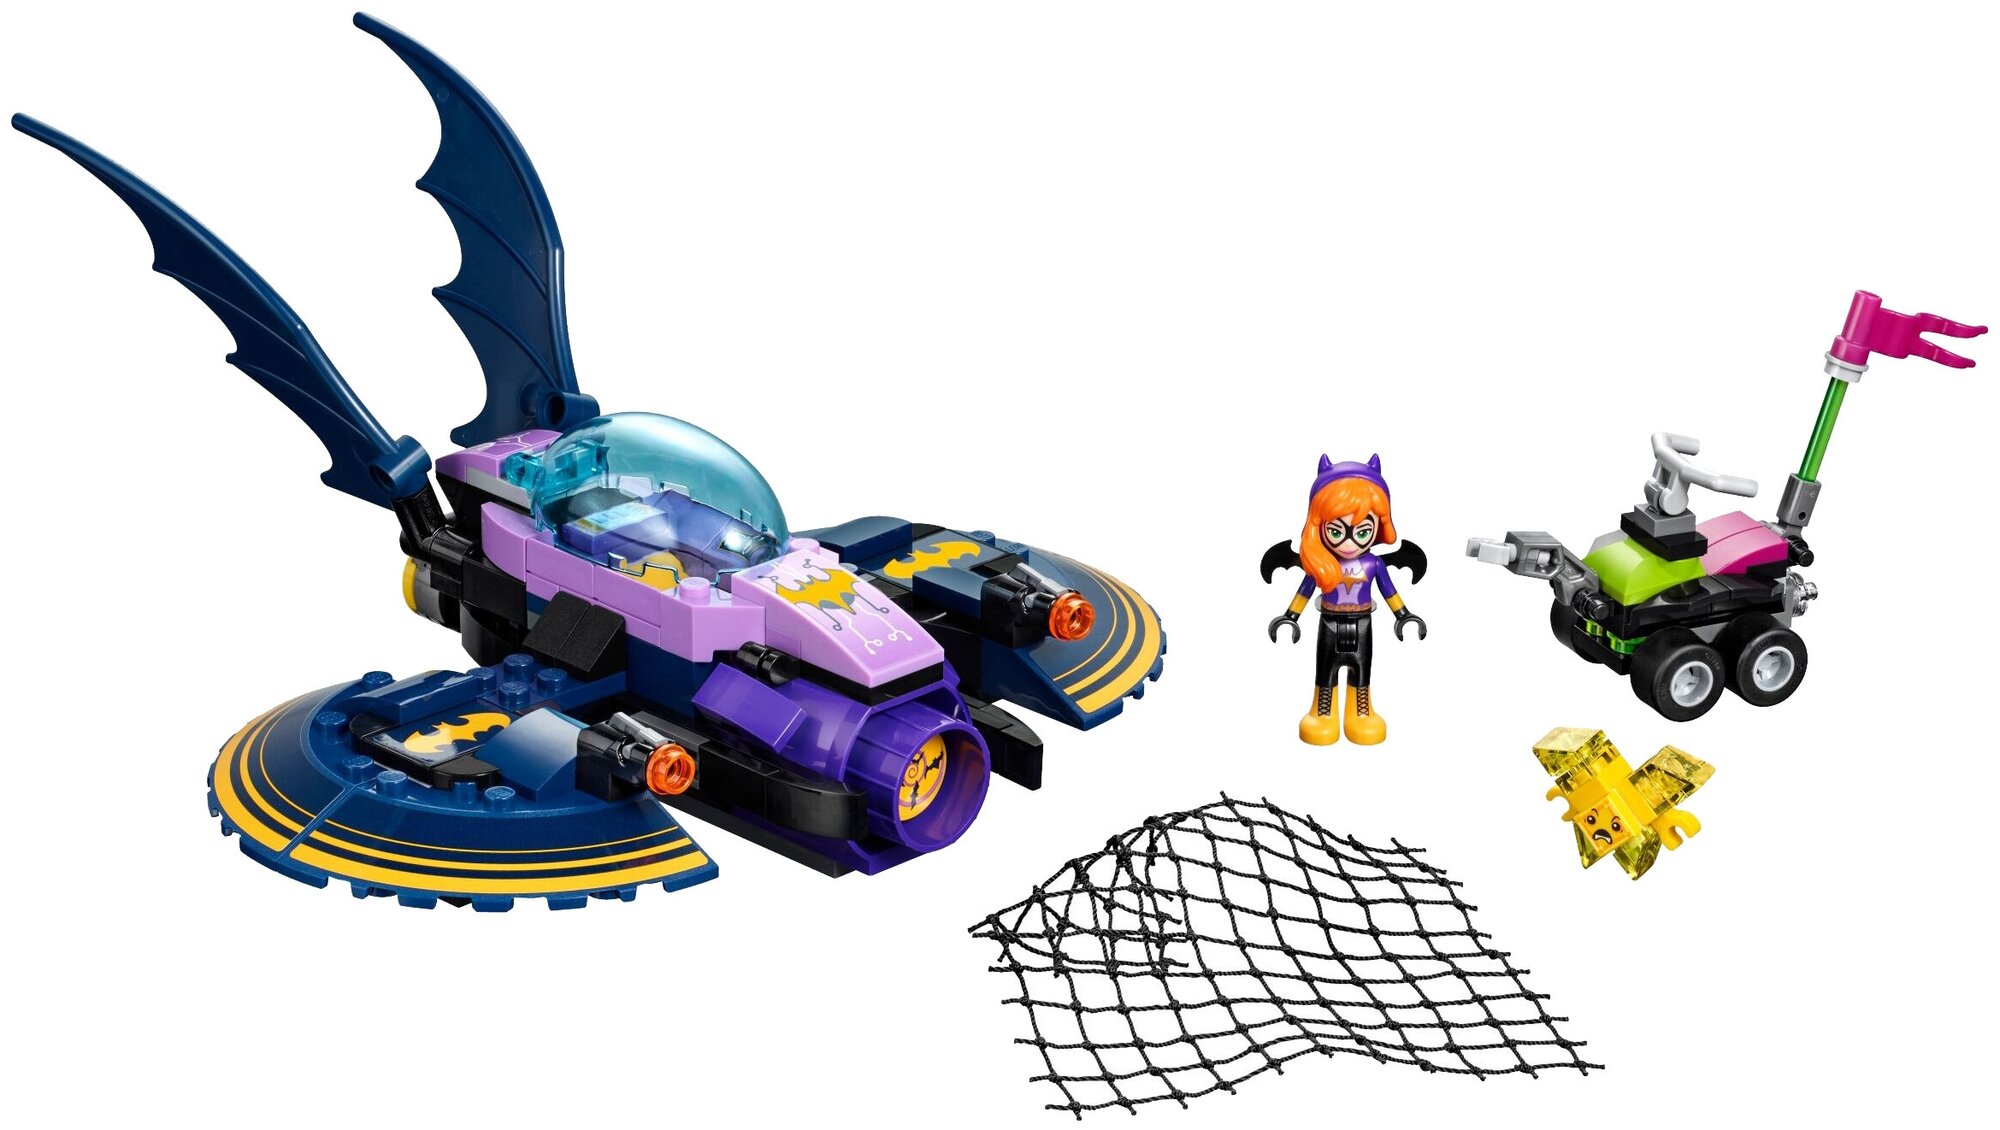 LEGO DC Super Hero Girls Бэтгёрл: погоня на реактивном самолёте - фото №2